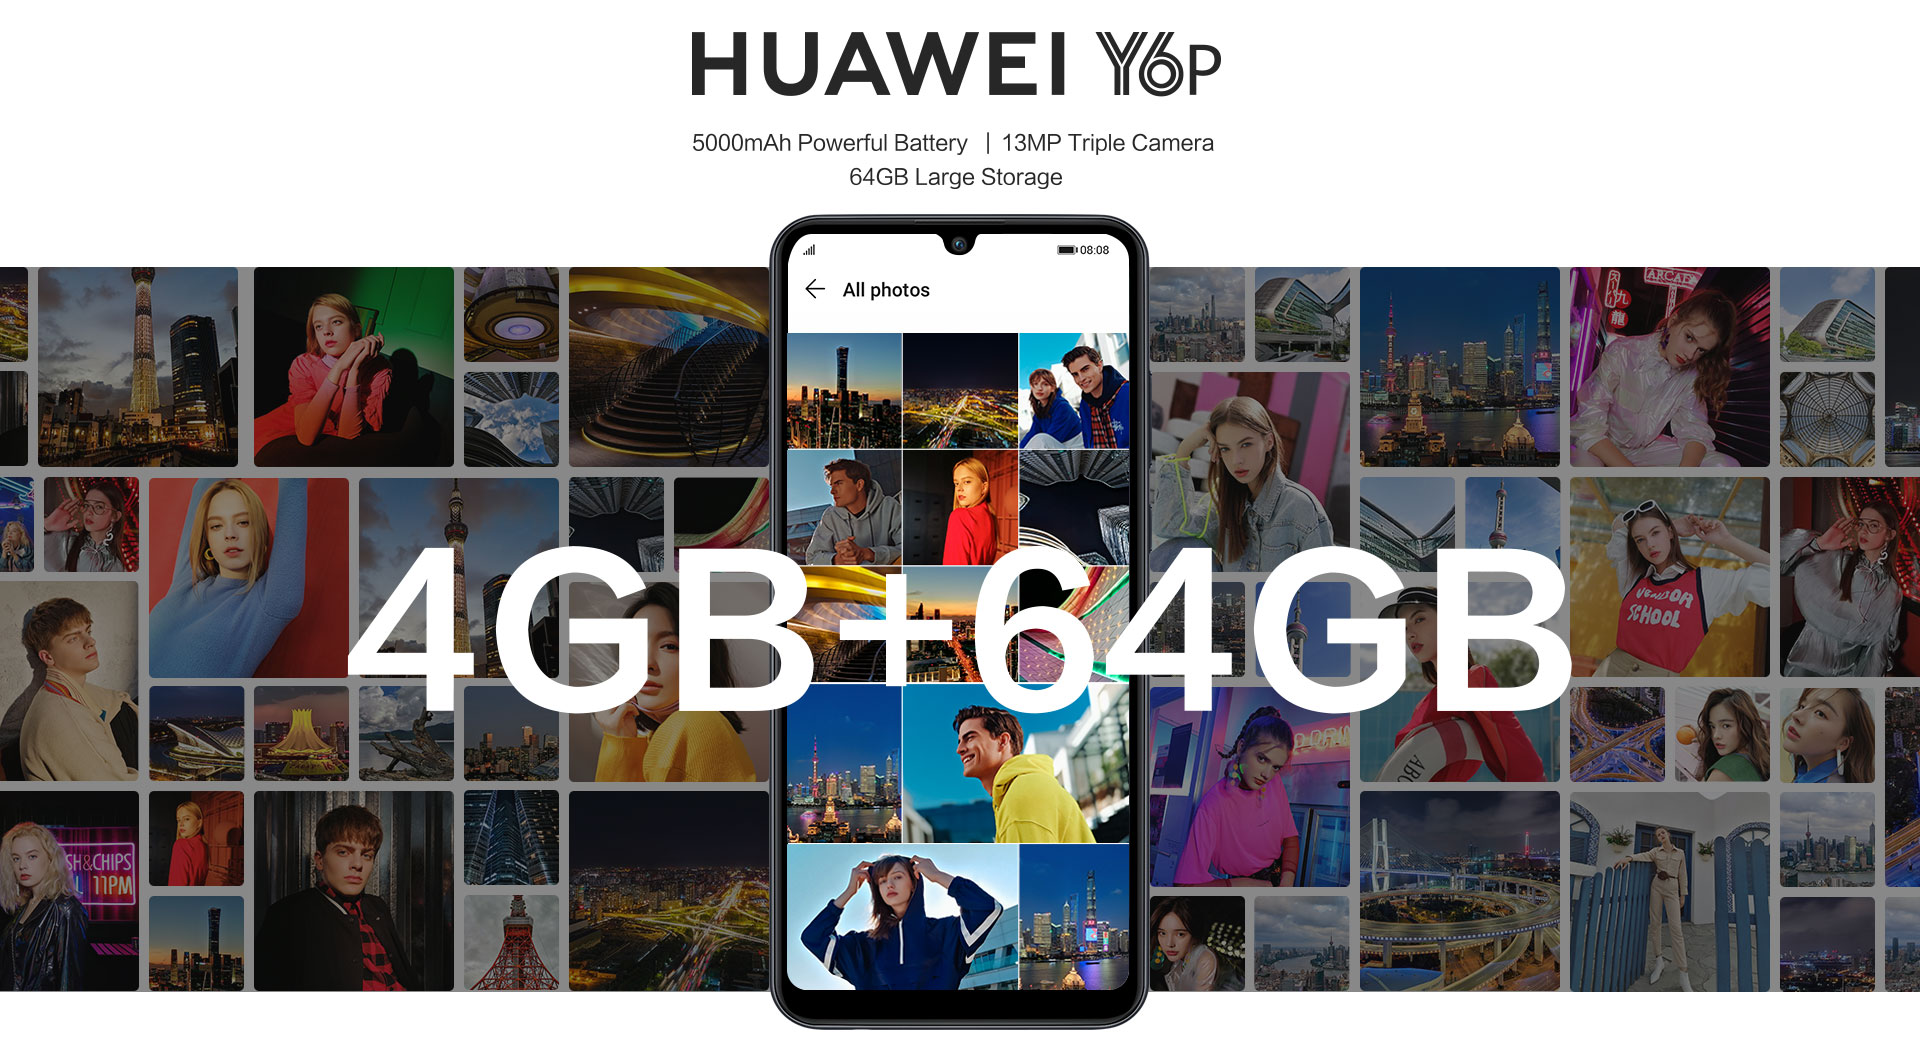 HUAWEI Y6p coming at 30,499.00 LKR with 4GB RAM + 64GB Large Storage